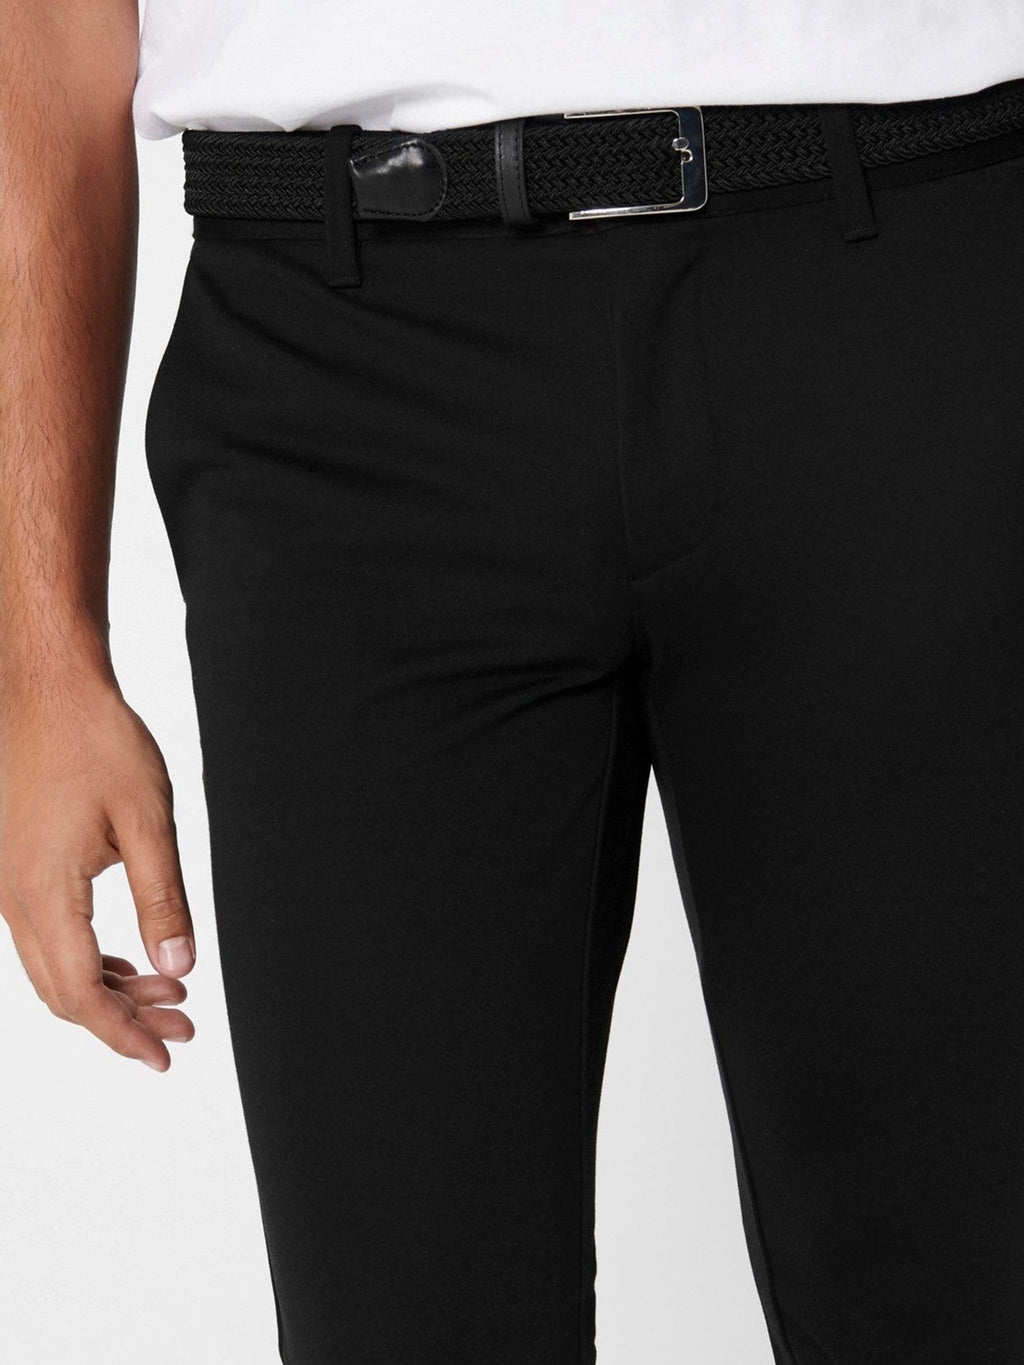 Markering Pants - Zwart (stretch pants)